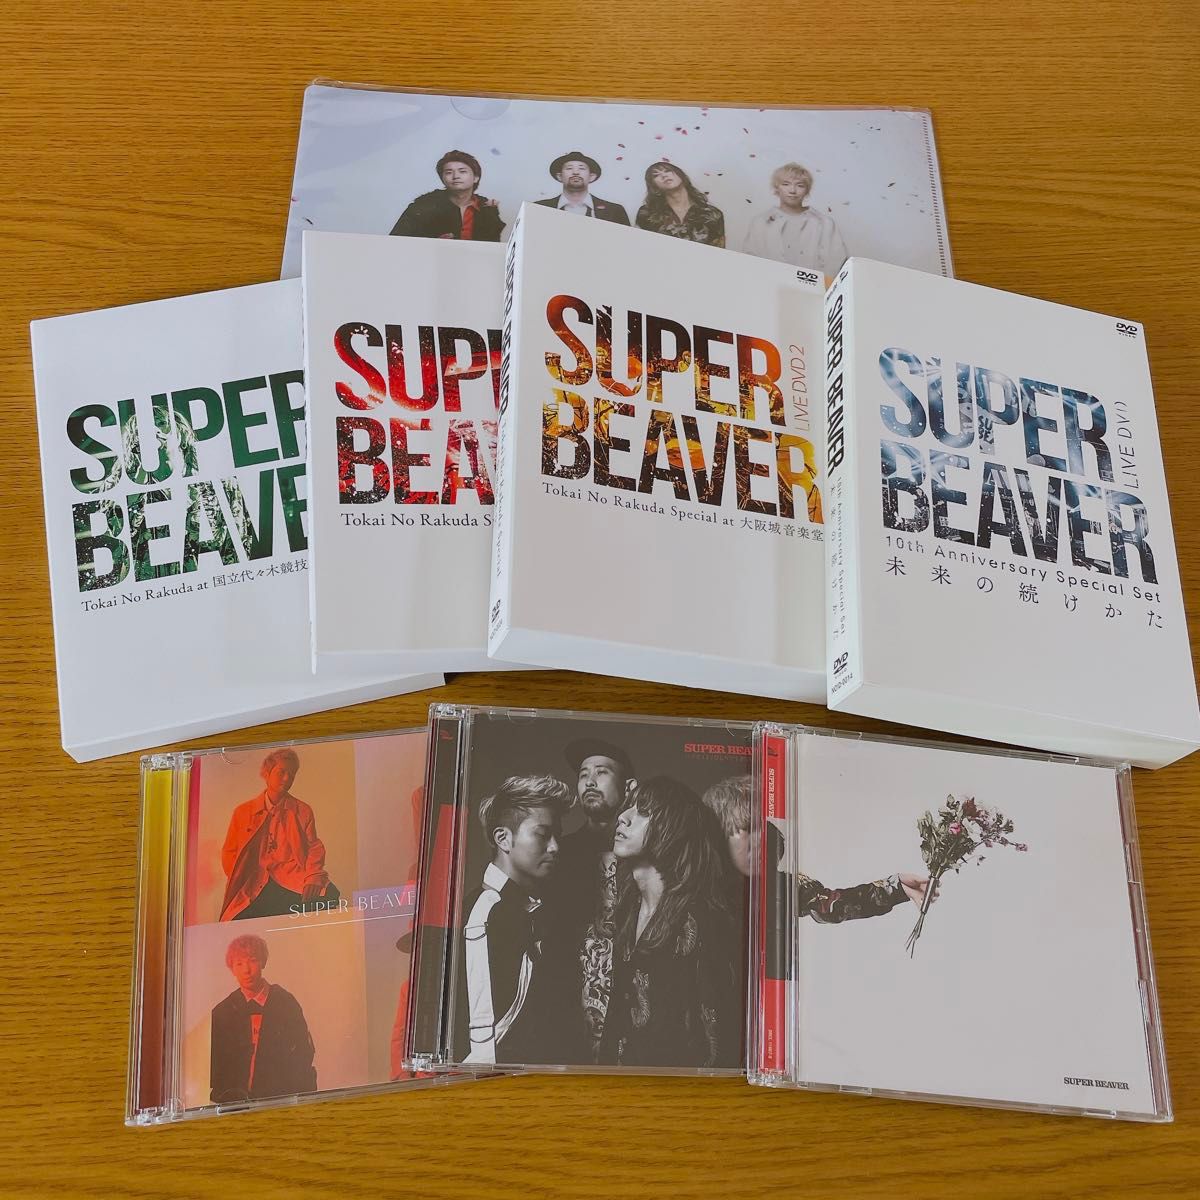 SEPER BEAVERのCD/DVDセット